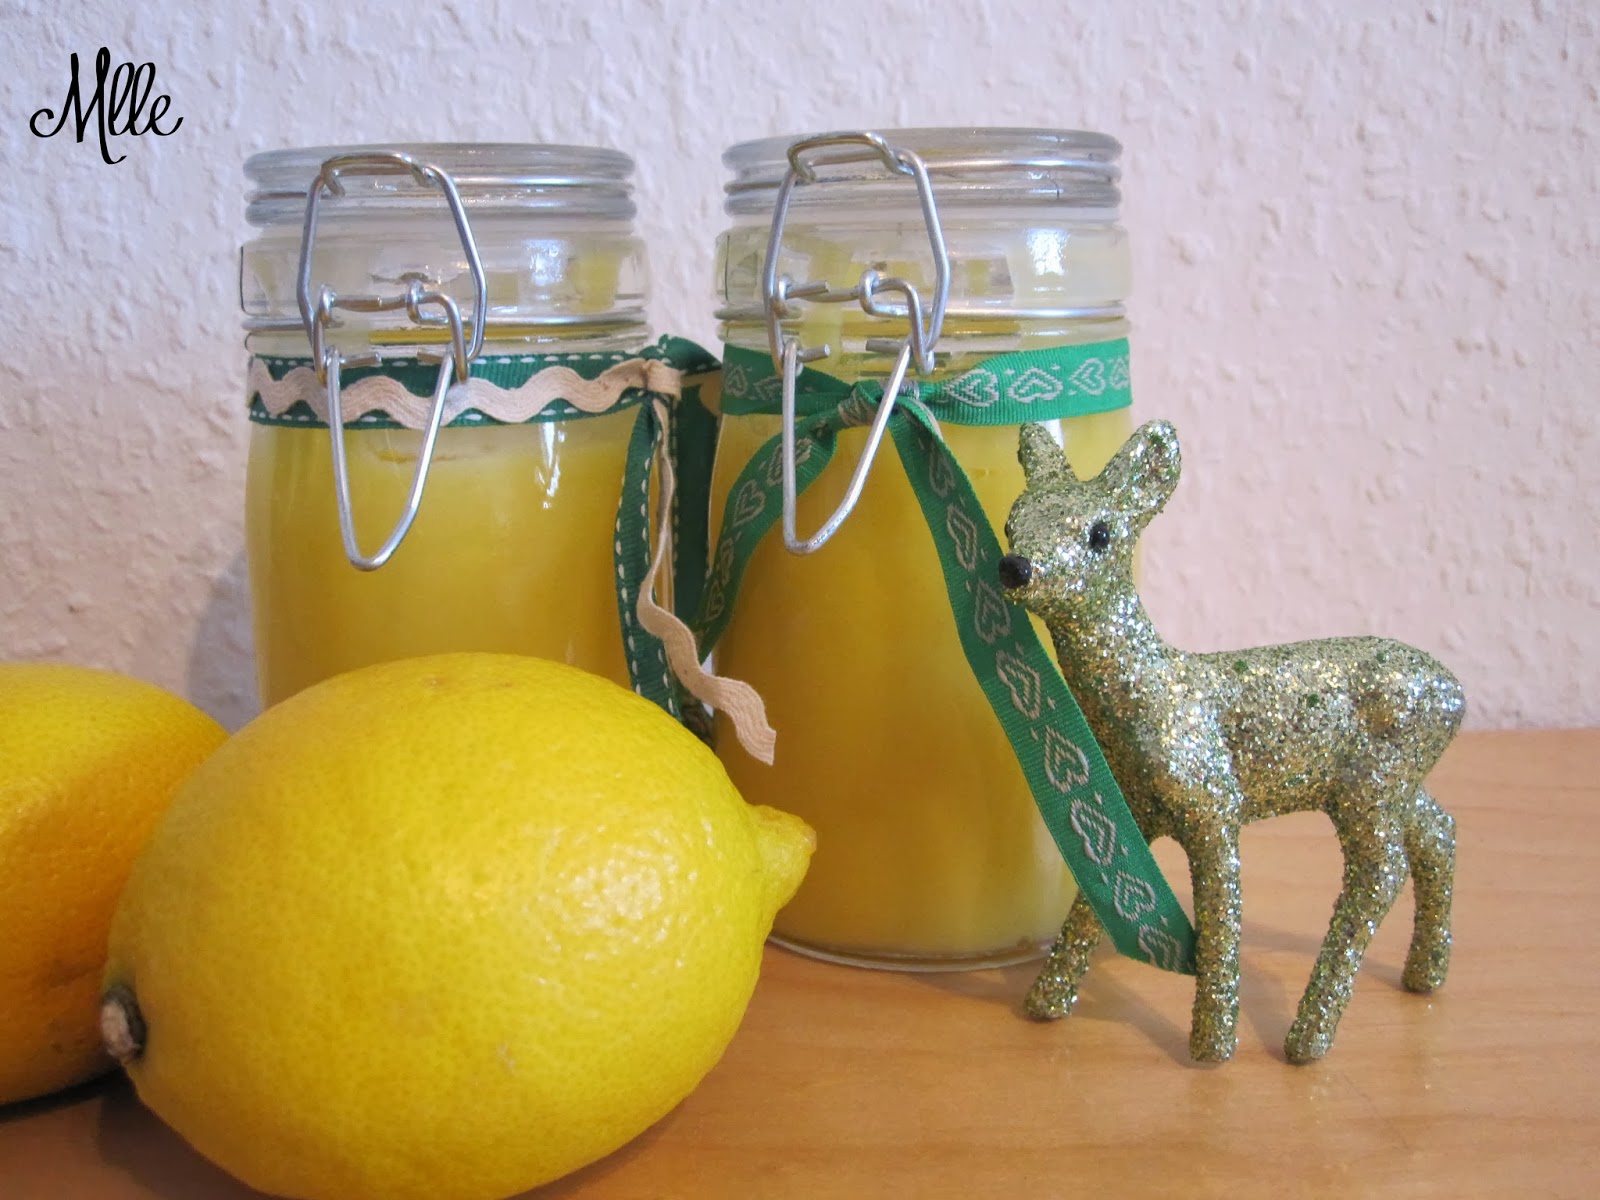 Lemon Curd - Englische Zitronencreme